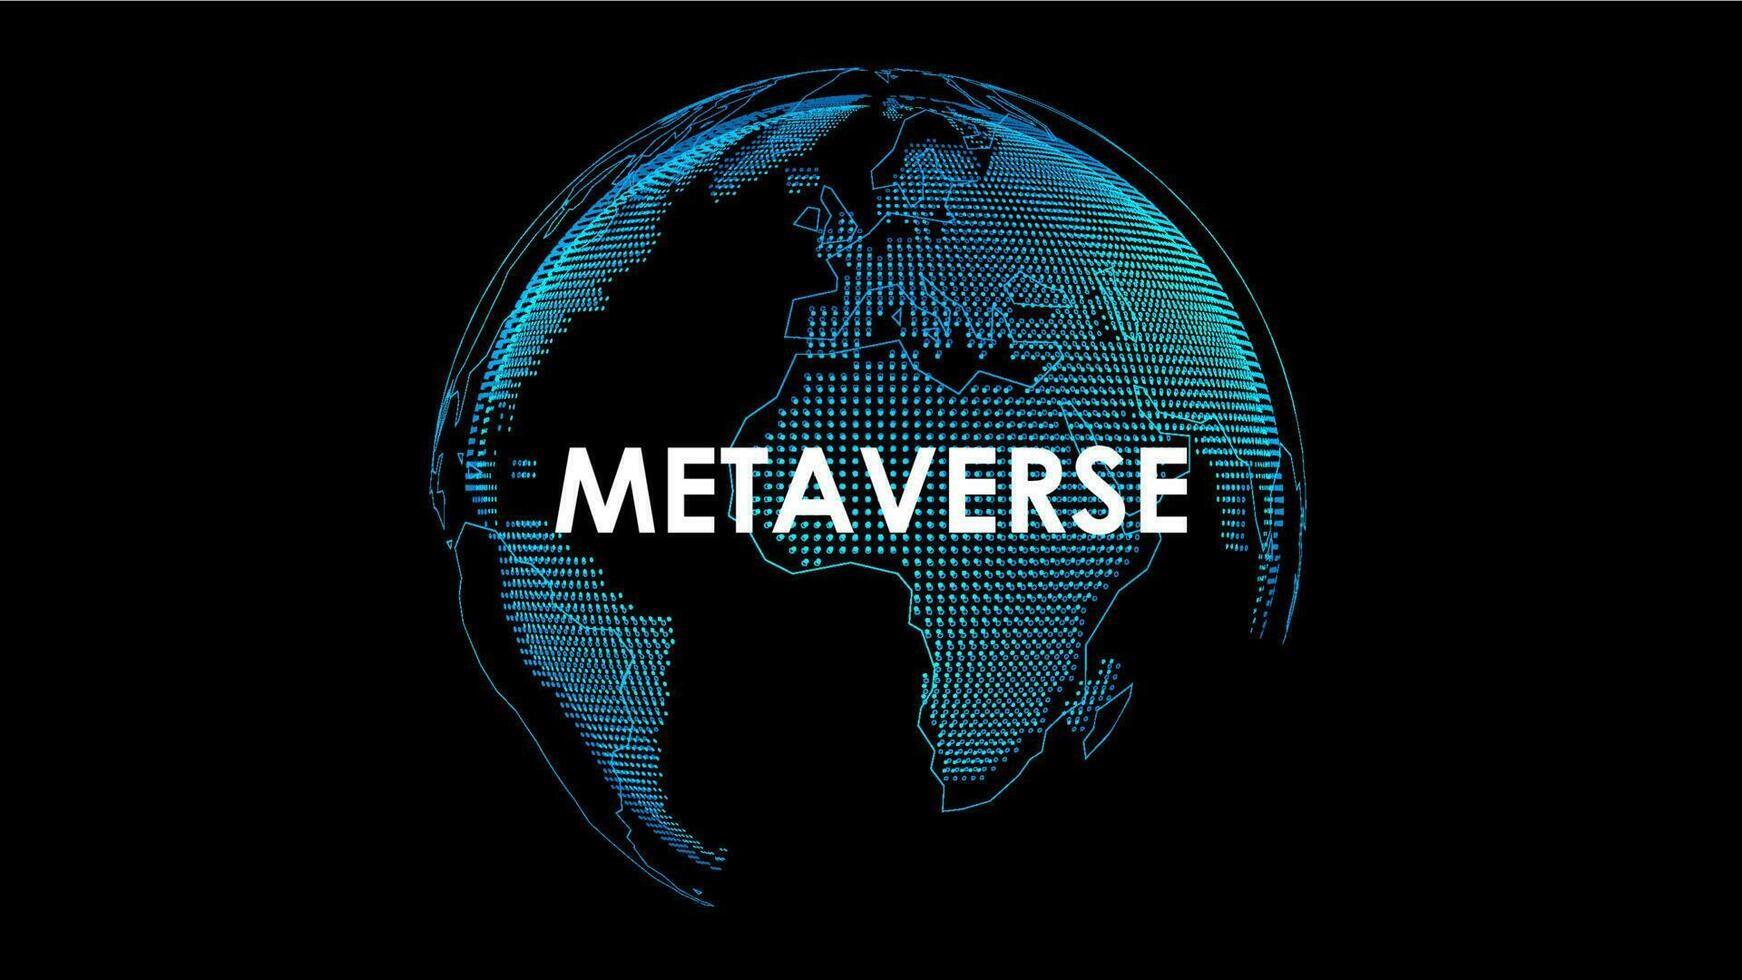 Metaverse digital virtual reality world technology with 3d hologram globe, vector illustration